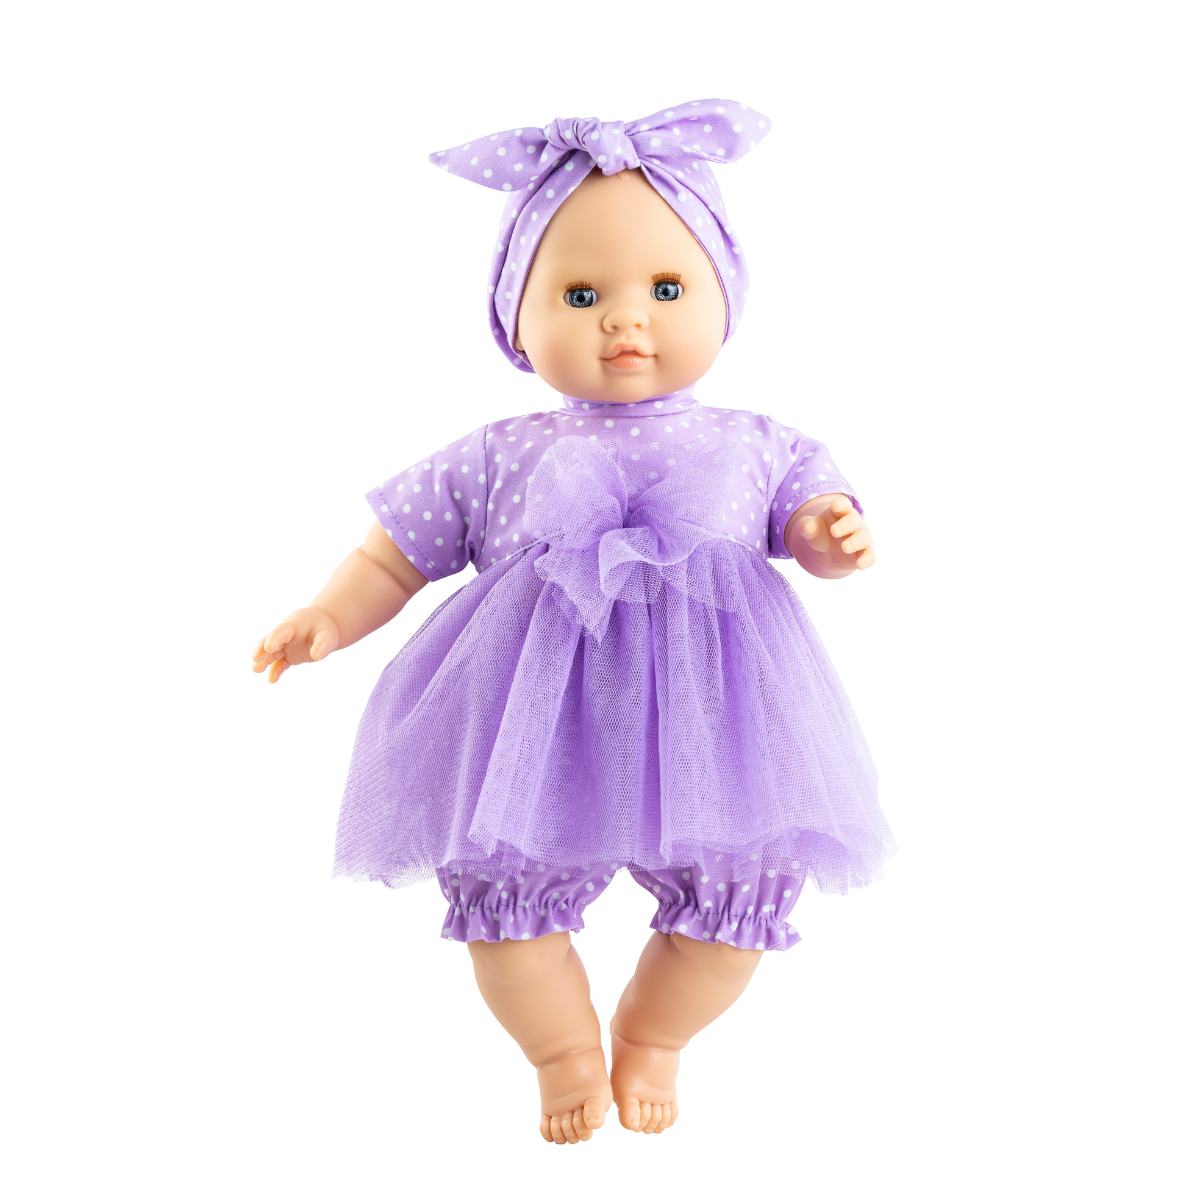 Spanish doll Bobas Paola Reina 07045